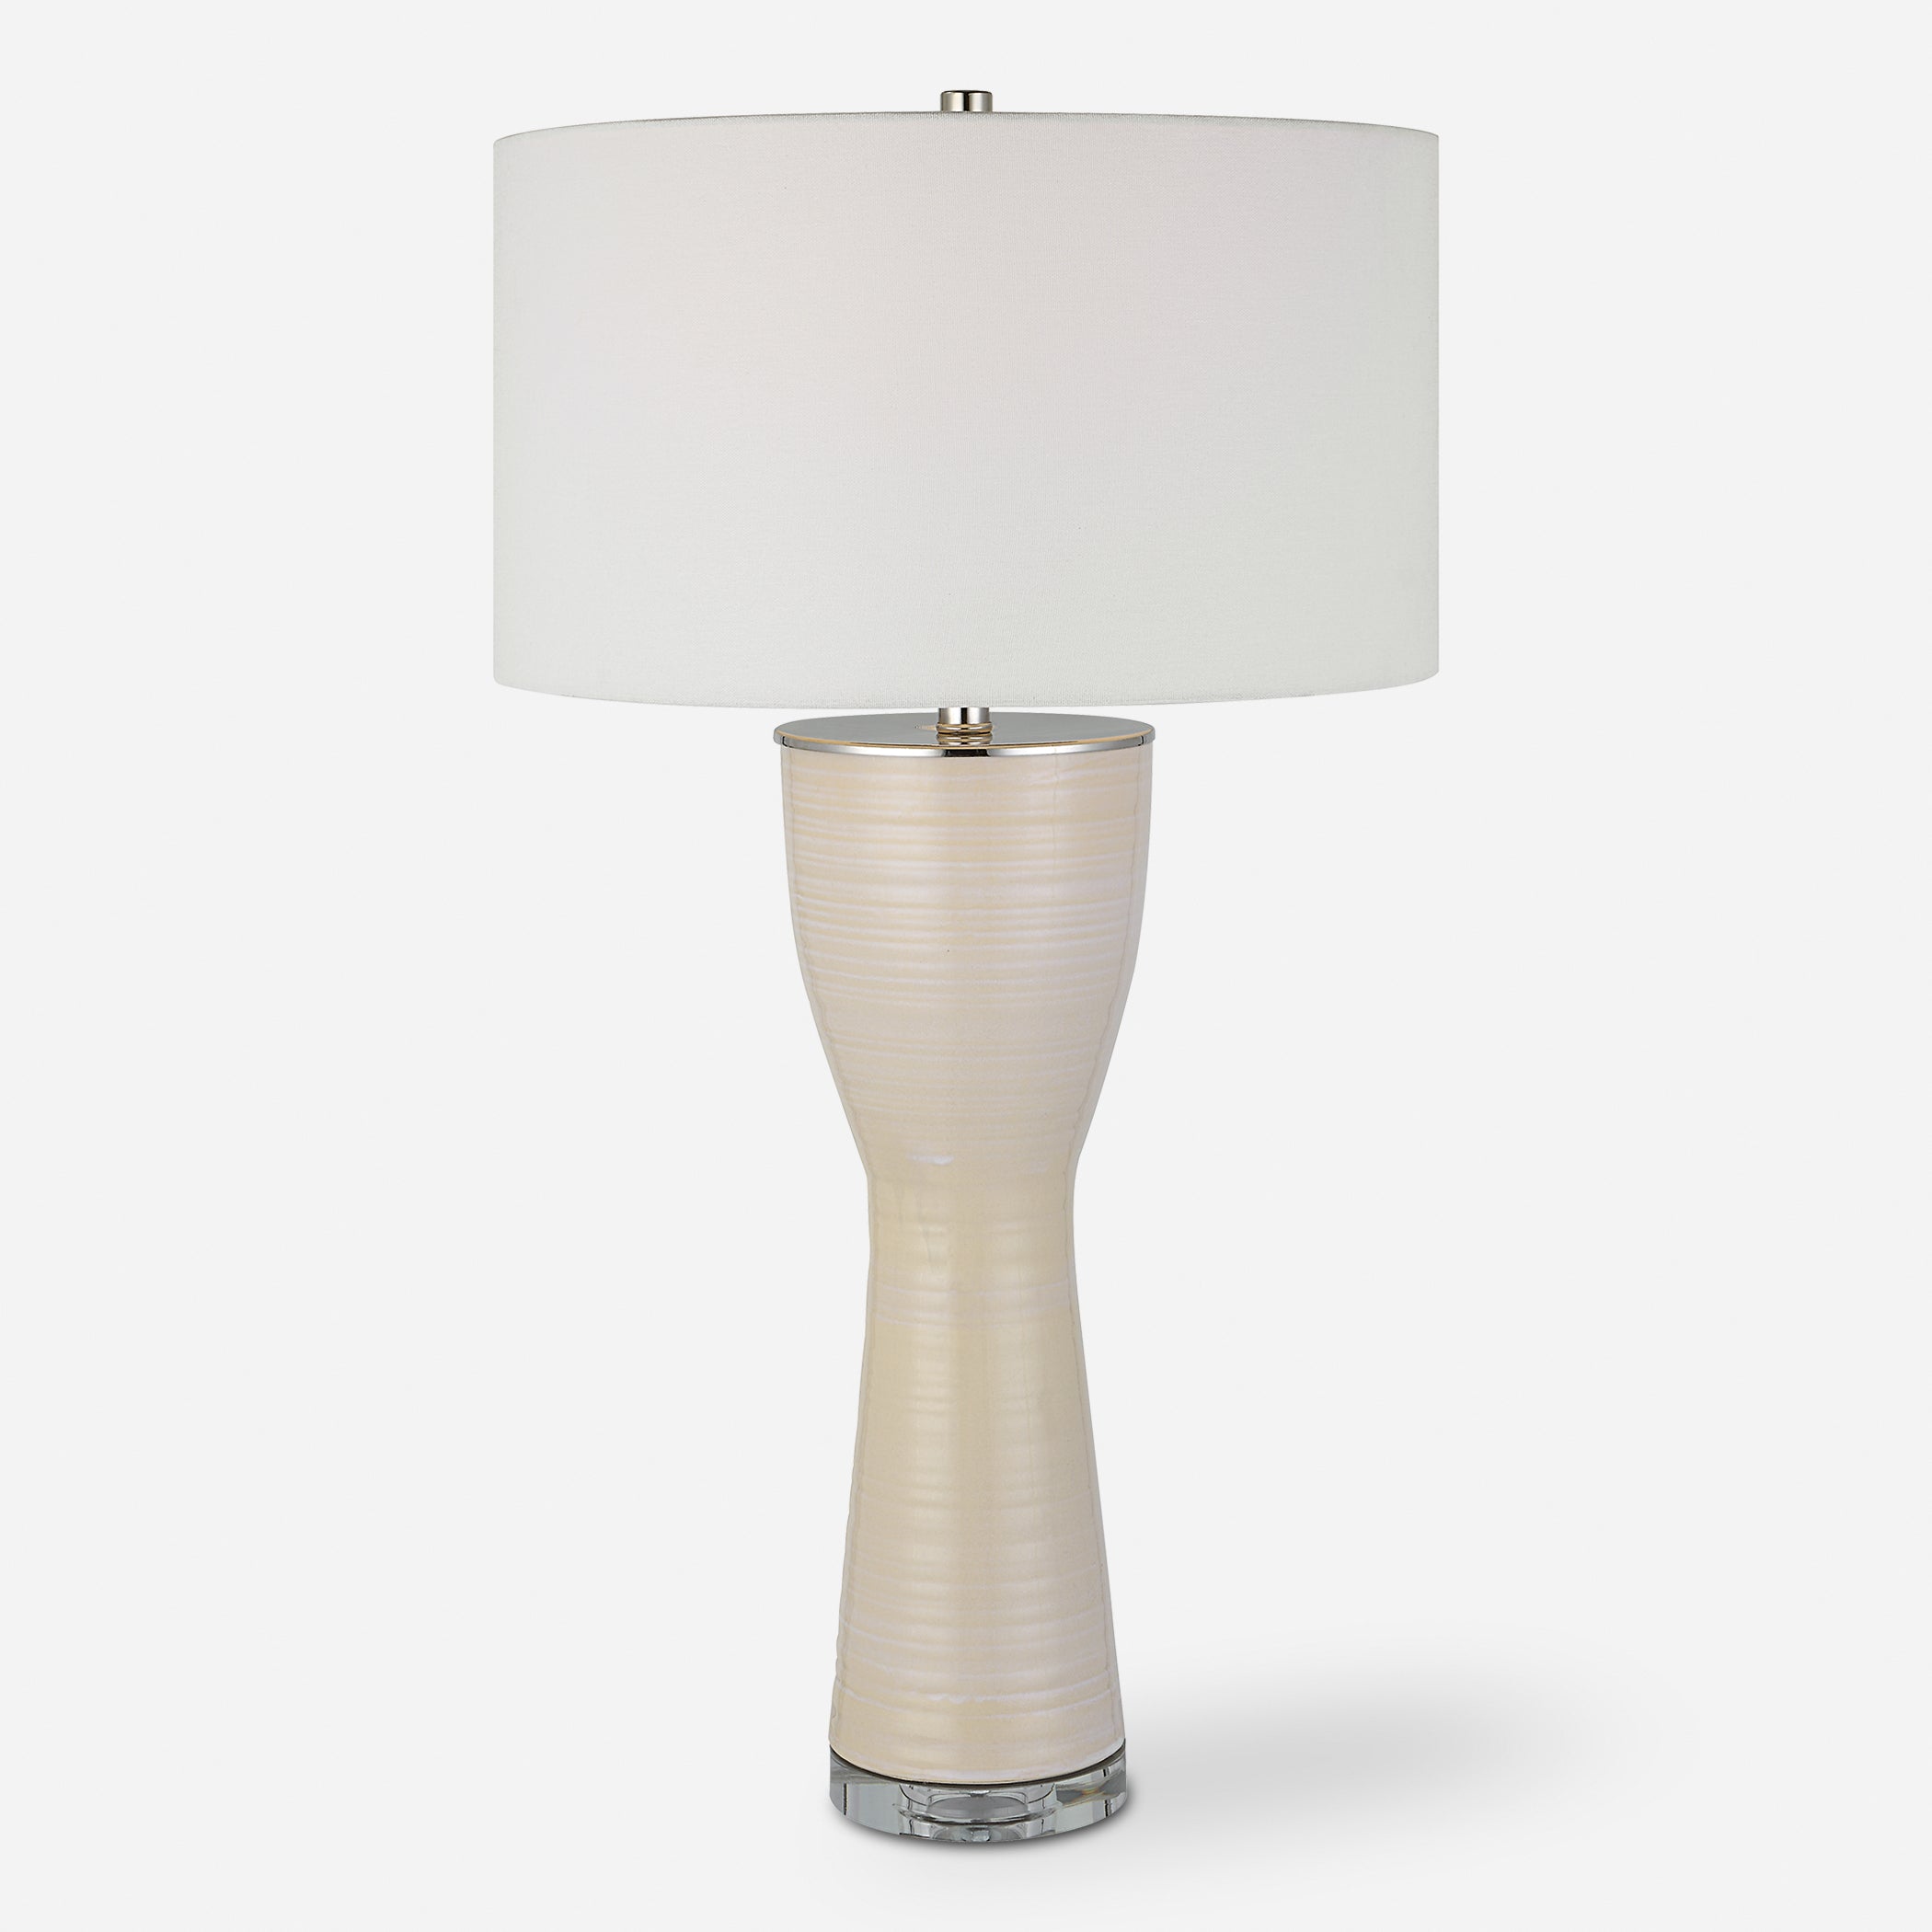 Uttermost Amphora Off-White Glaze Table Lamp Off-White Glaze Table Lamp Uttermost   